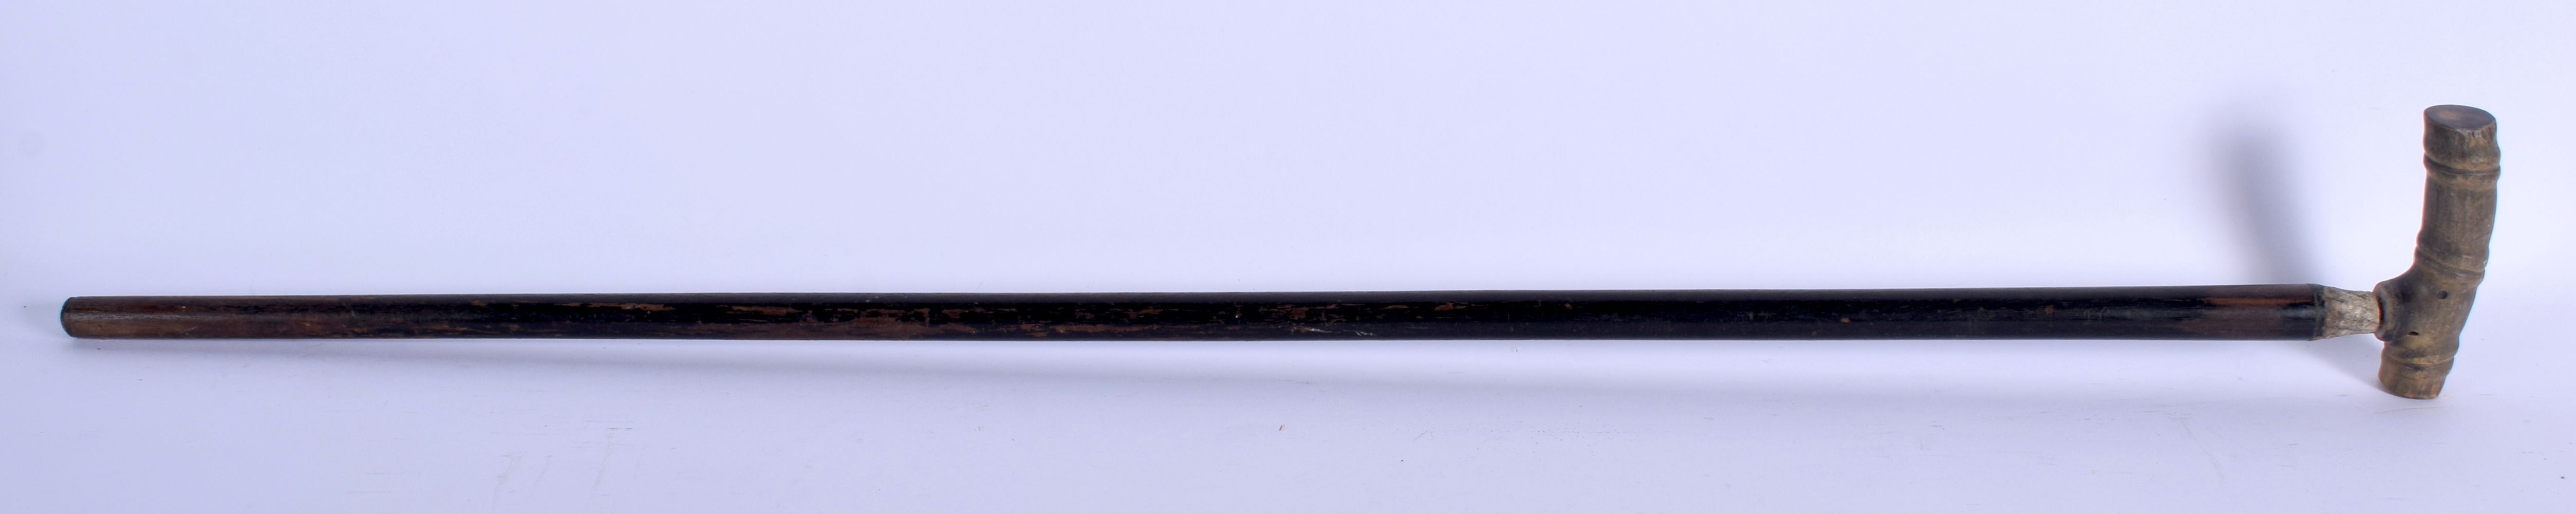 A 19TH CENTURY MIDDLE EASTERN CARVED RHINOCEROS HORN HANDLED WALKING CANE. 88 cm long. - Bild 3 aus 3